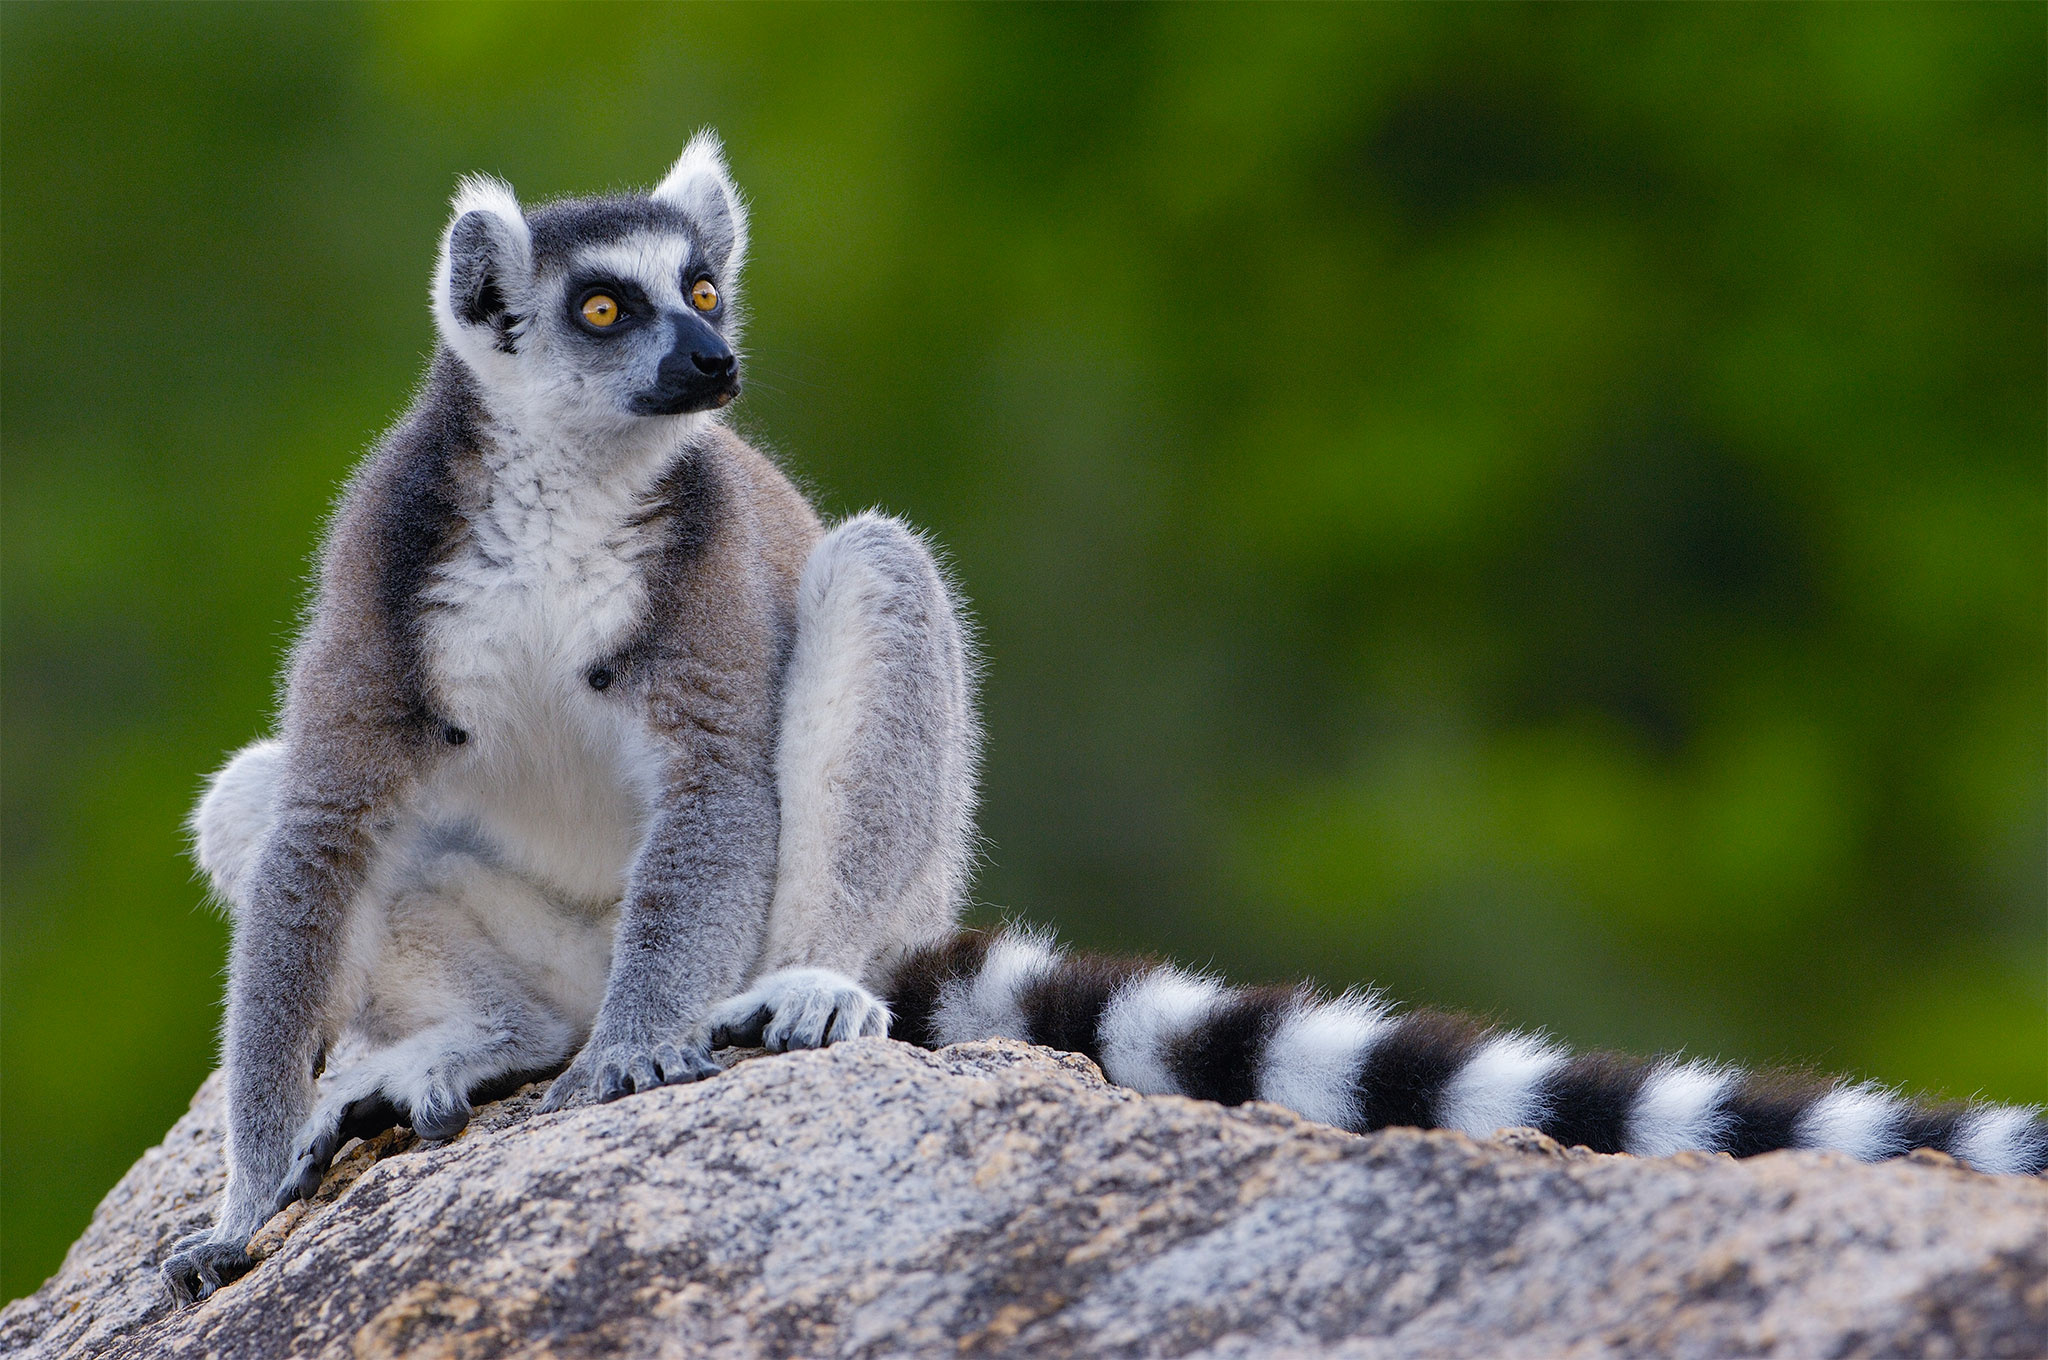 Lemur HQ wallpapers, Animal pictures, 4K nature images, Primate photography, 2050x1360 HD Desktop